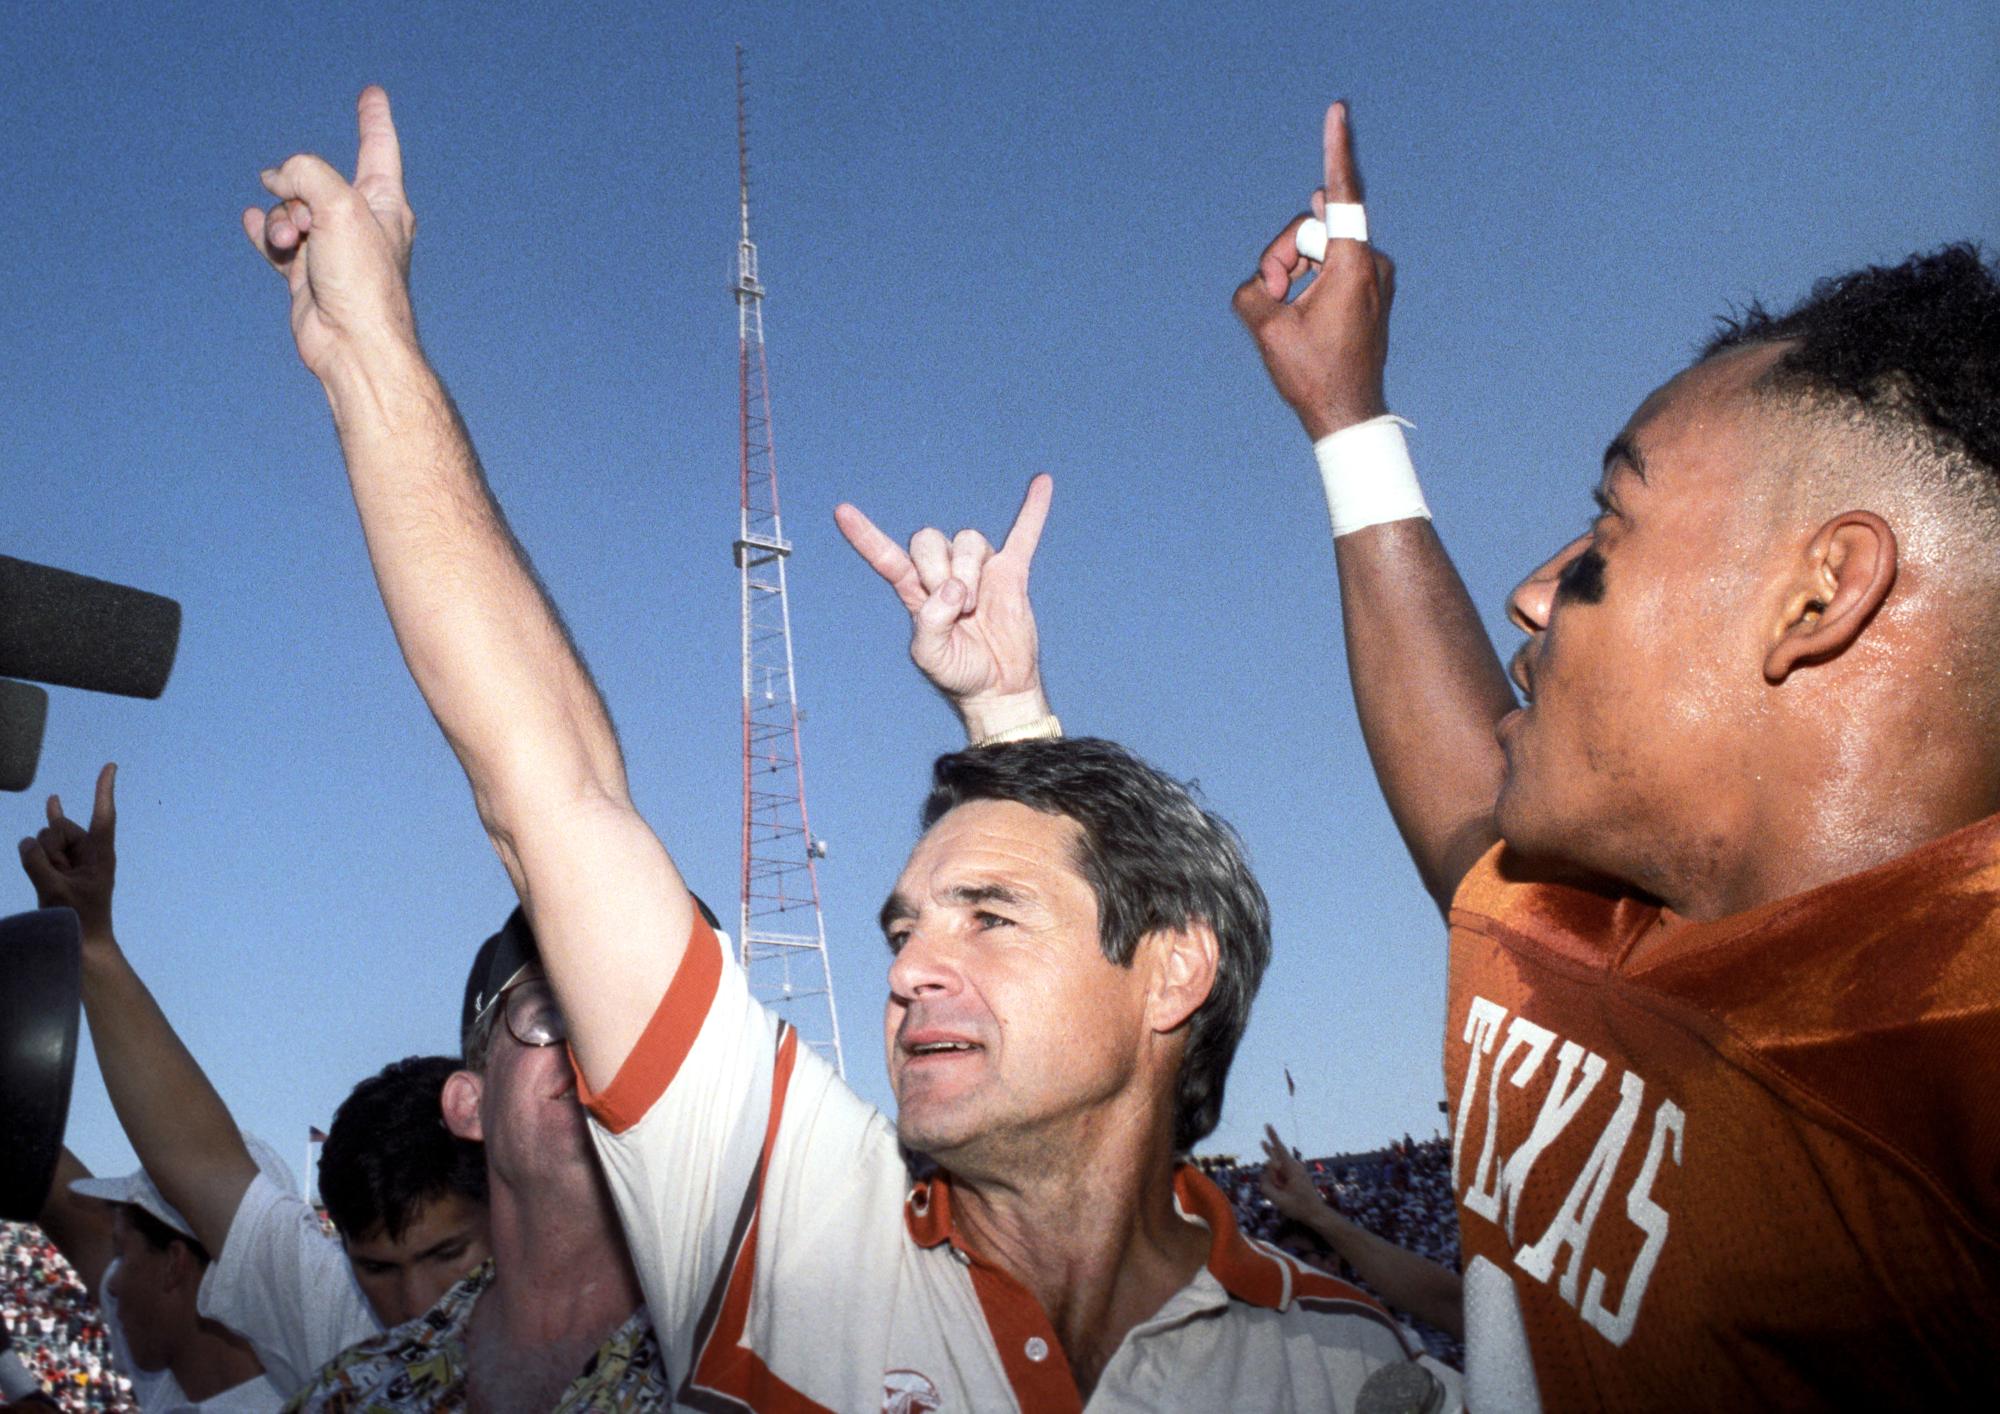 Daily Texan (1991-1992) - Game Winners